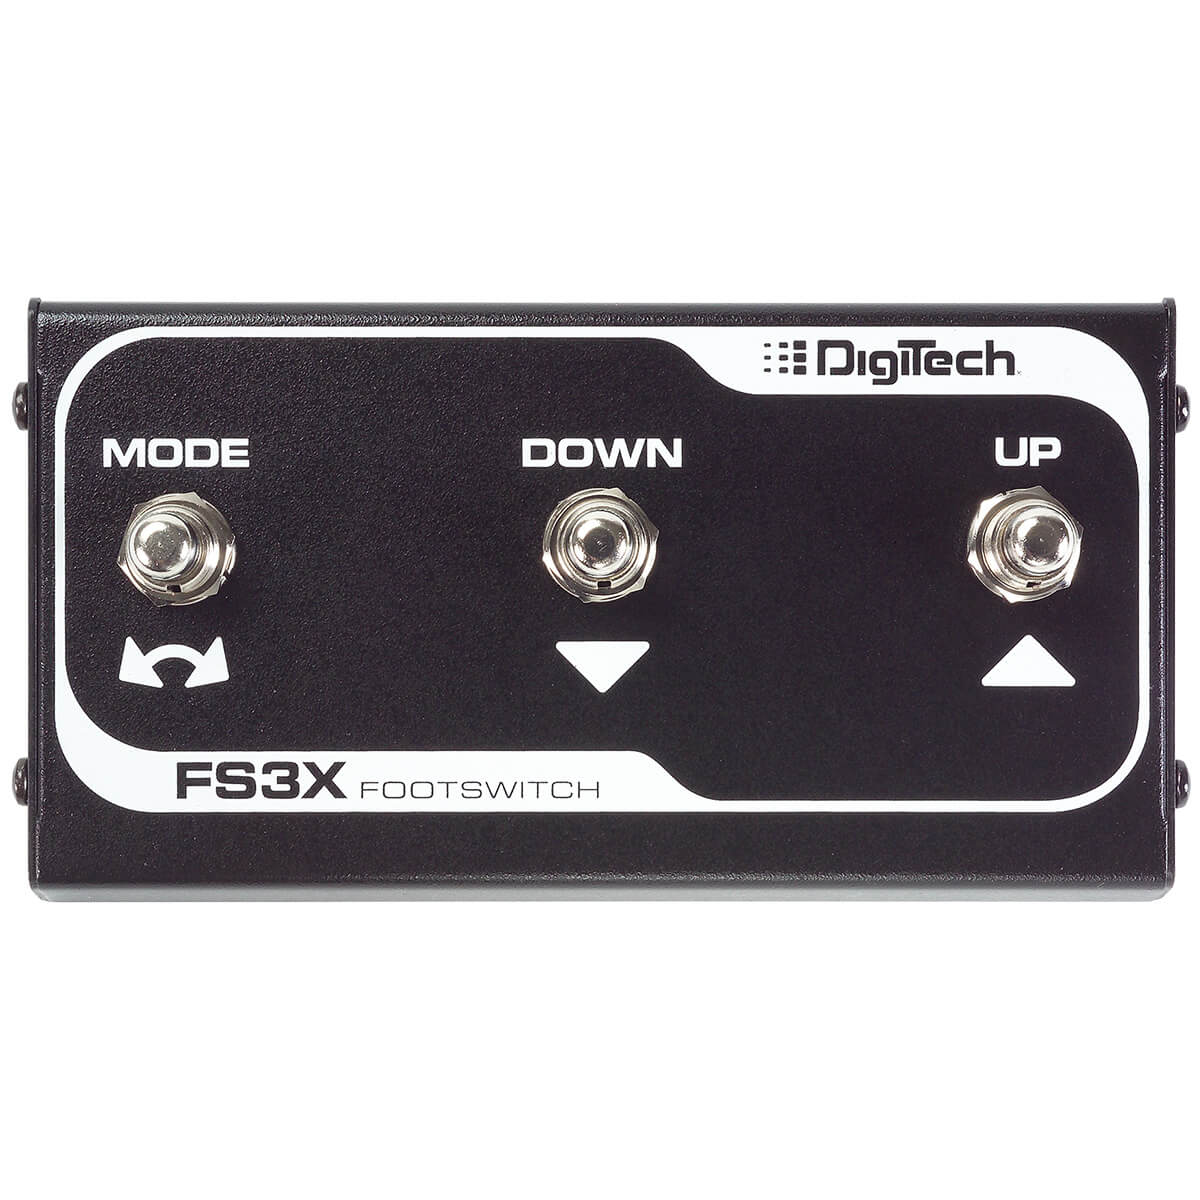 DigiTech FS3X foot switch in black. Top view